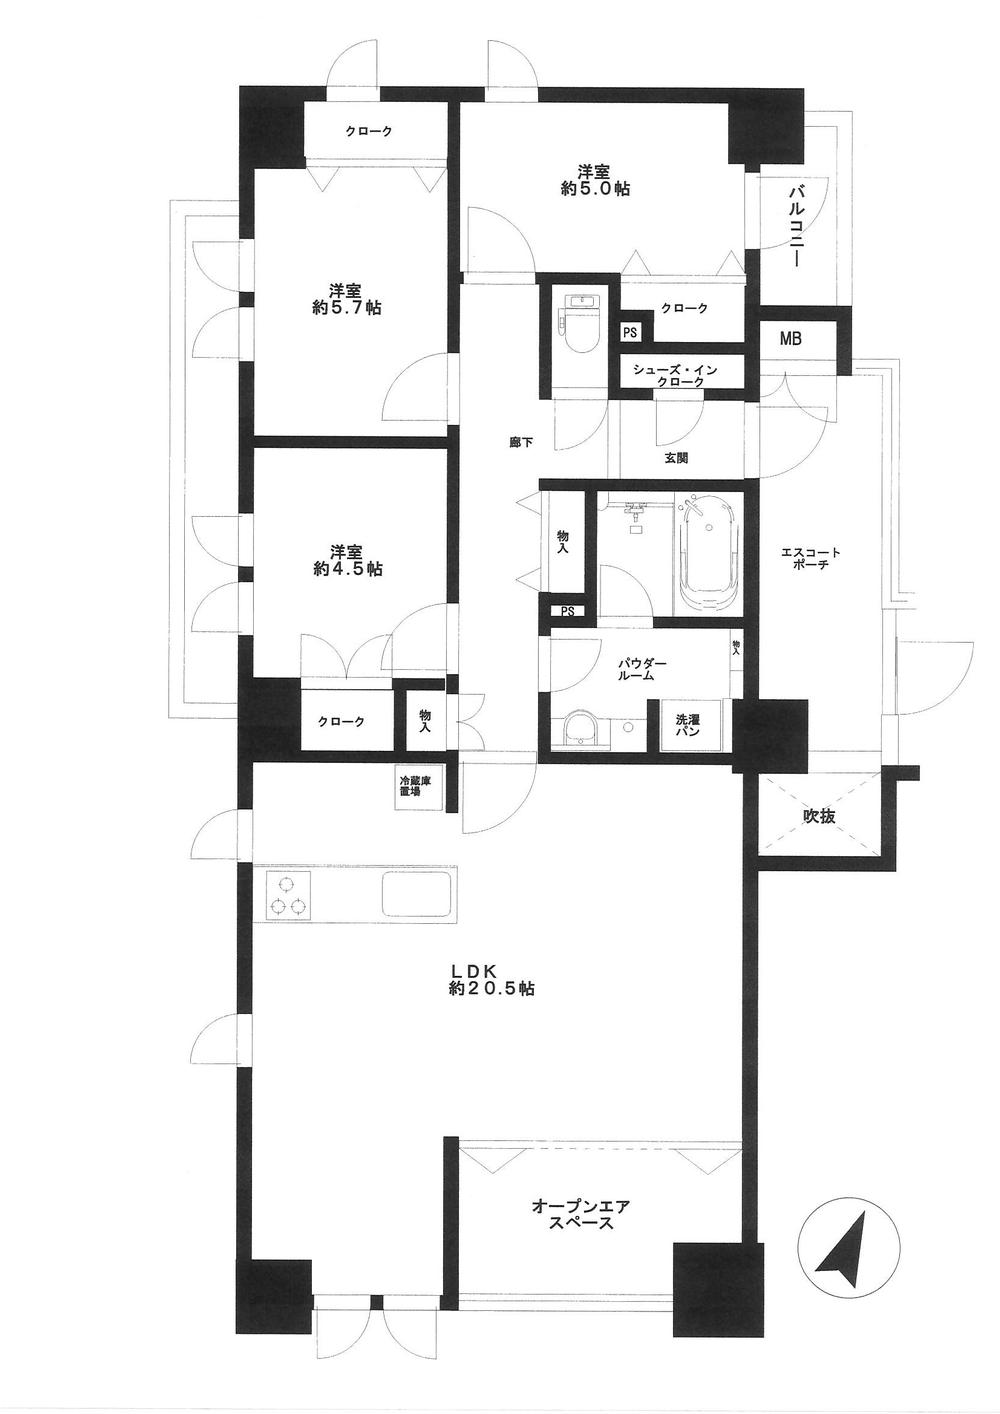 Floor plan. 3LDK, Price 38,800,000 yen, Footprint 85.4 sq m , Balcony area 2.75 sq m